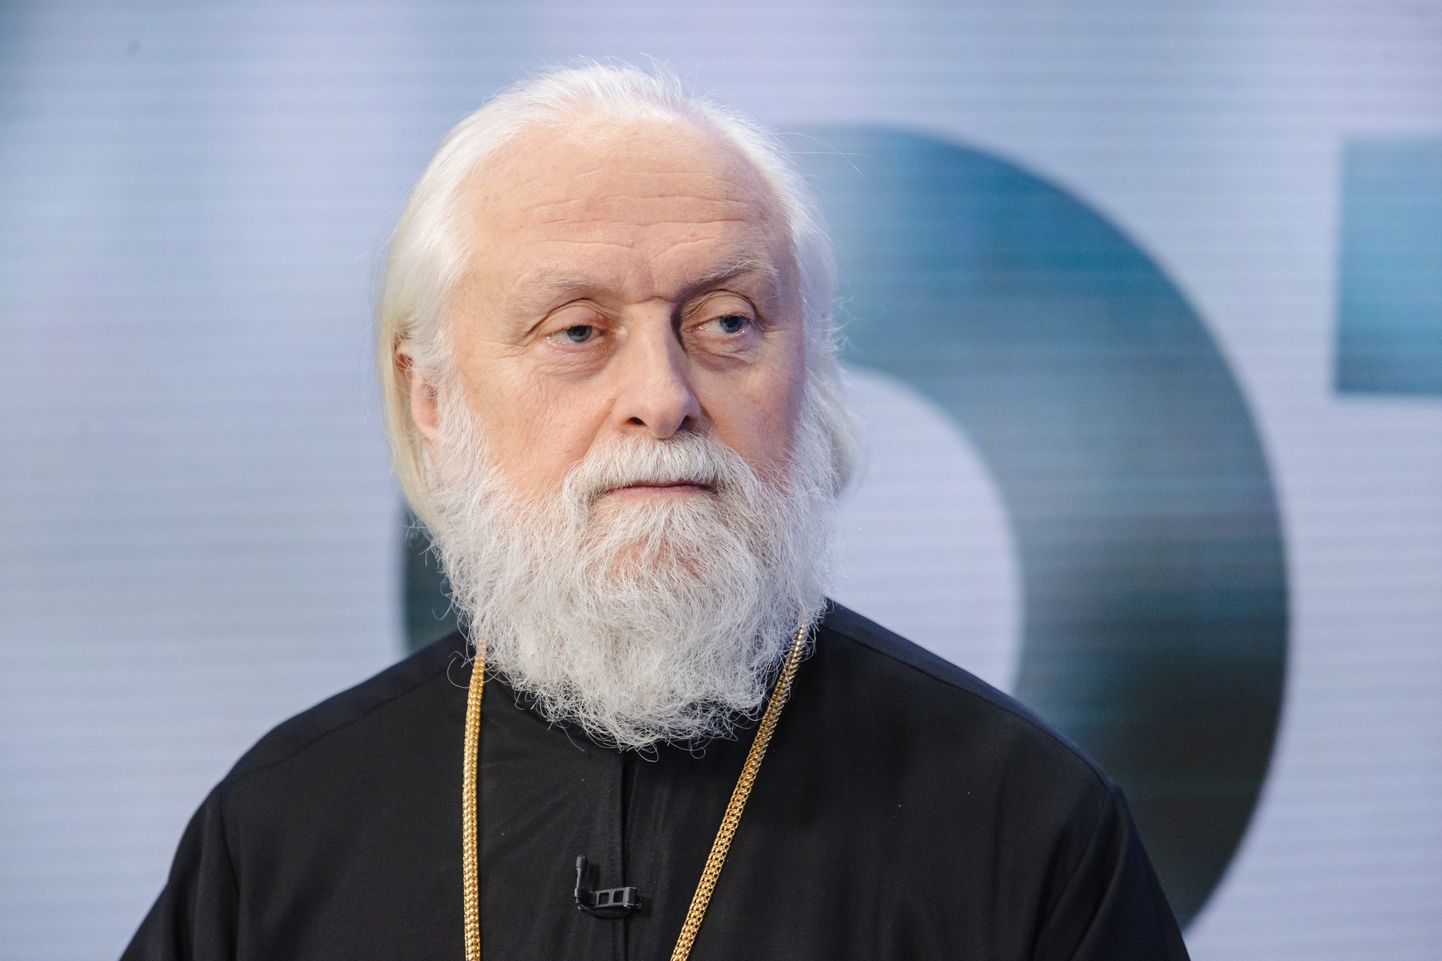 Metropolitan Eugeni (Valeri Rešetnikov) of the Estonian Orthodox Church of the Moscow Patriarchate had to leave Estonia in February.